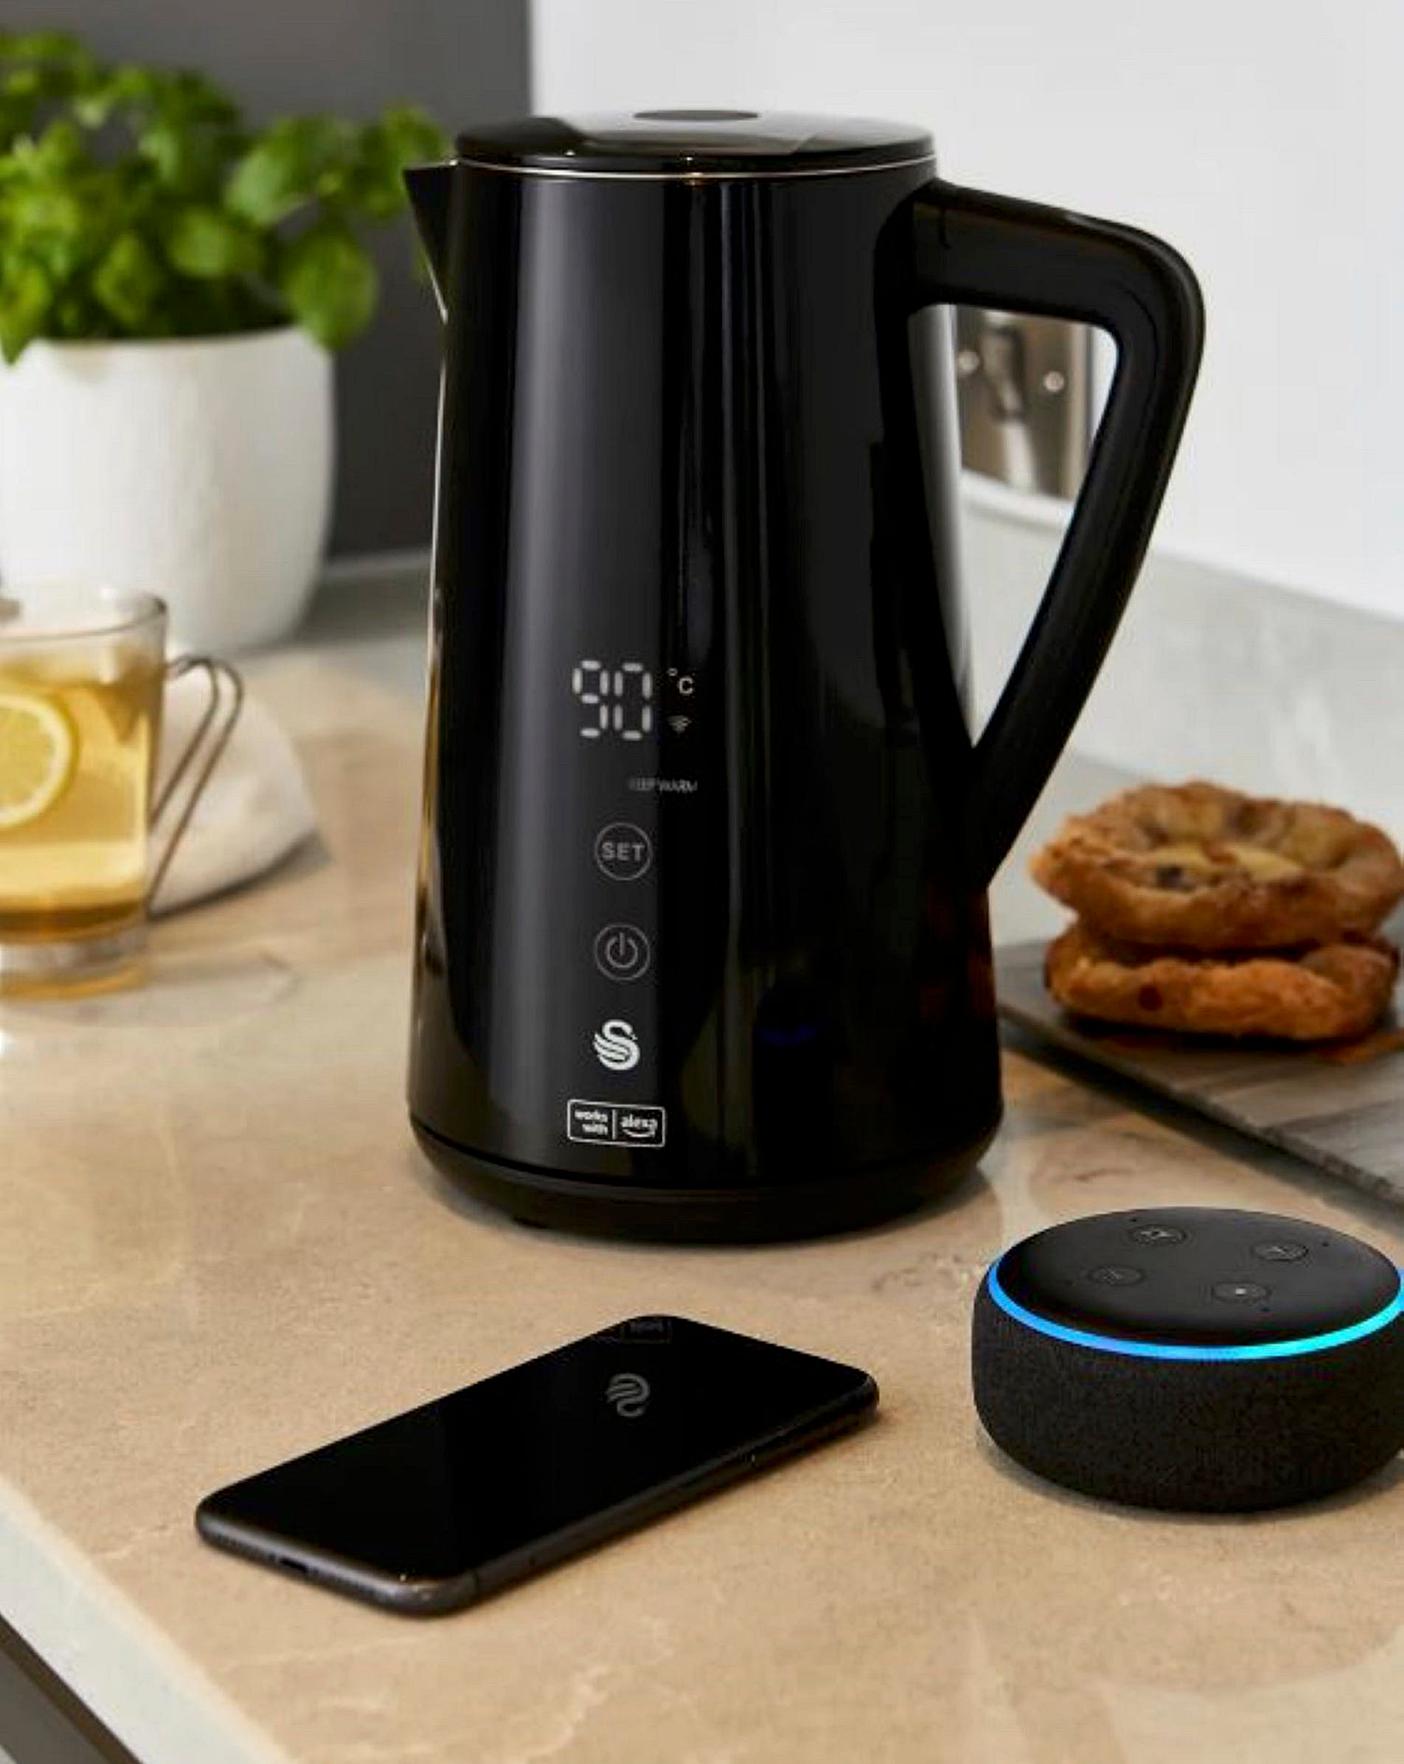 Swan Alexa enabled smart kettle, Black Friday deal. Alexa Smart Kettle